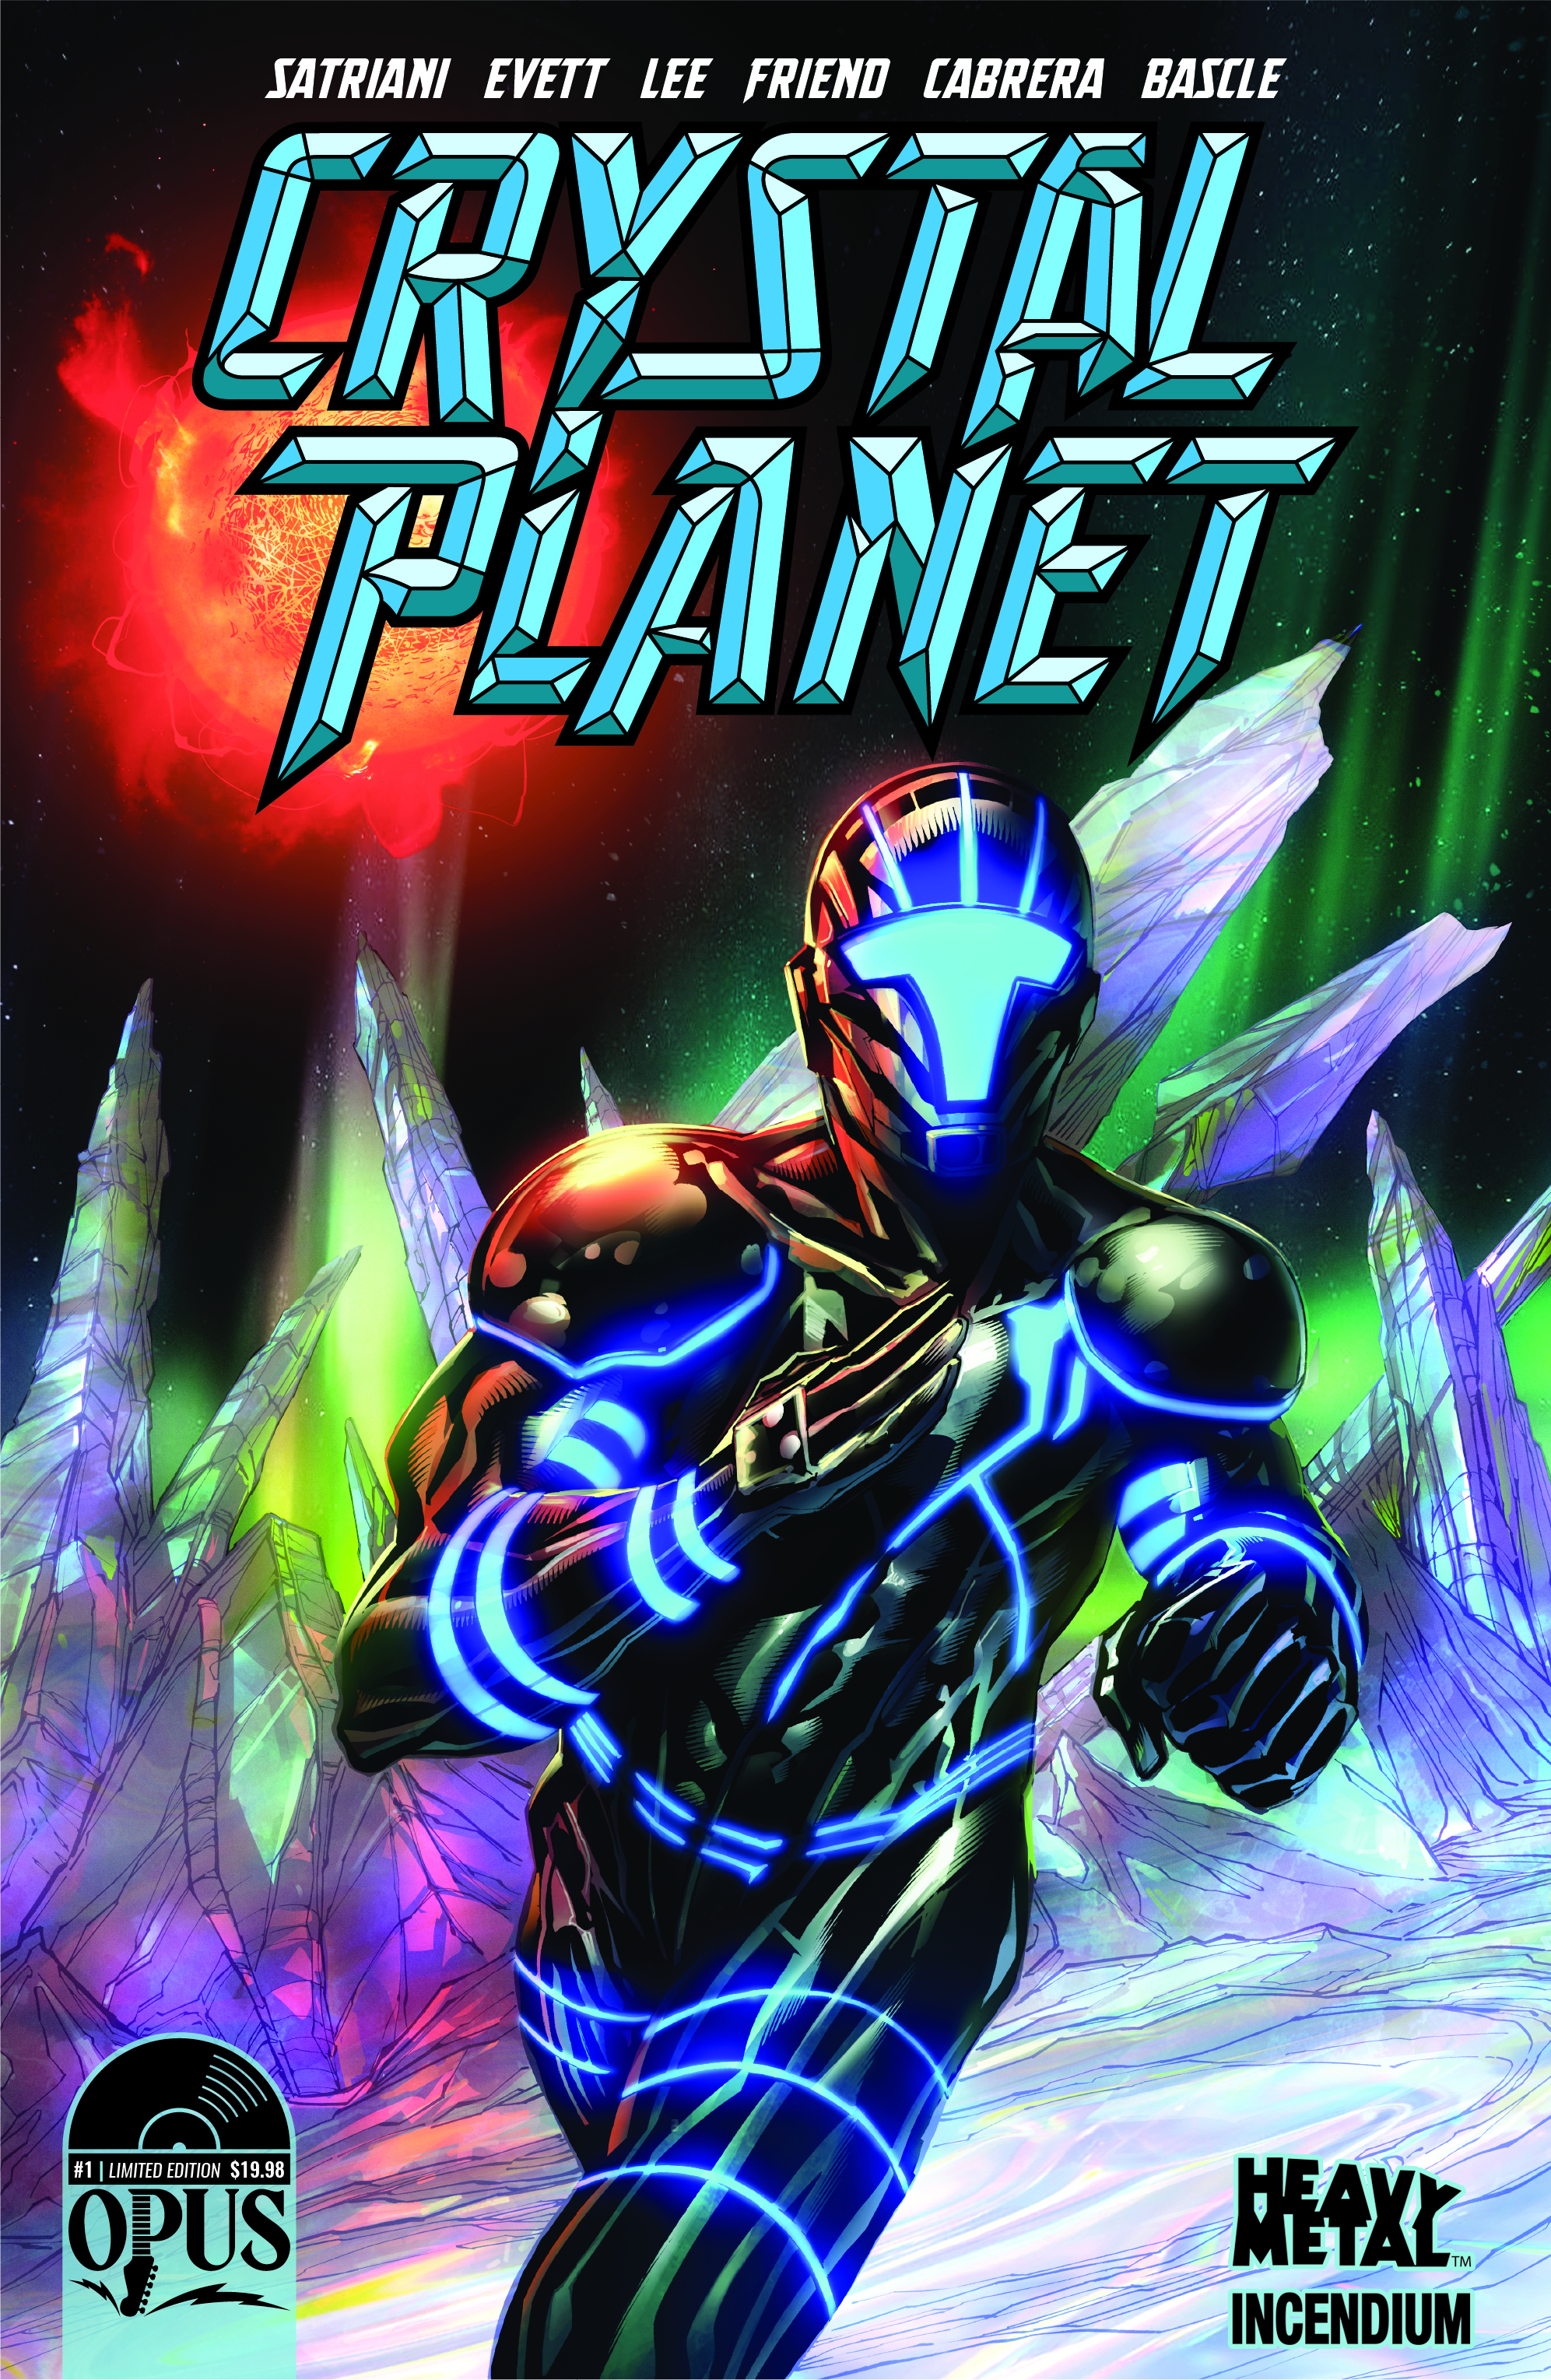 JOE SATRIANI Set to Release "Crystal Planet" Comic Book Series